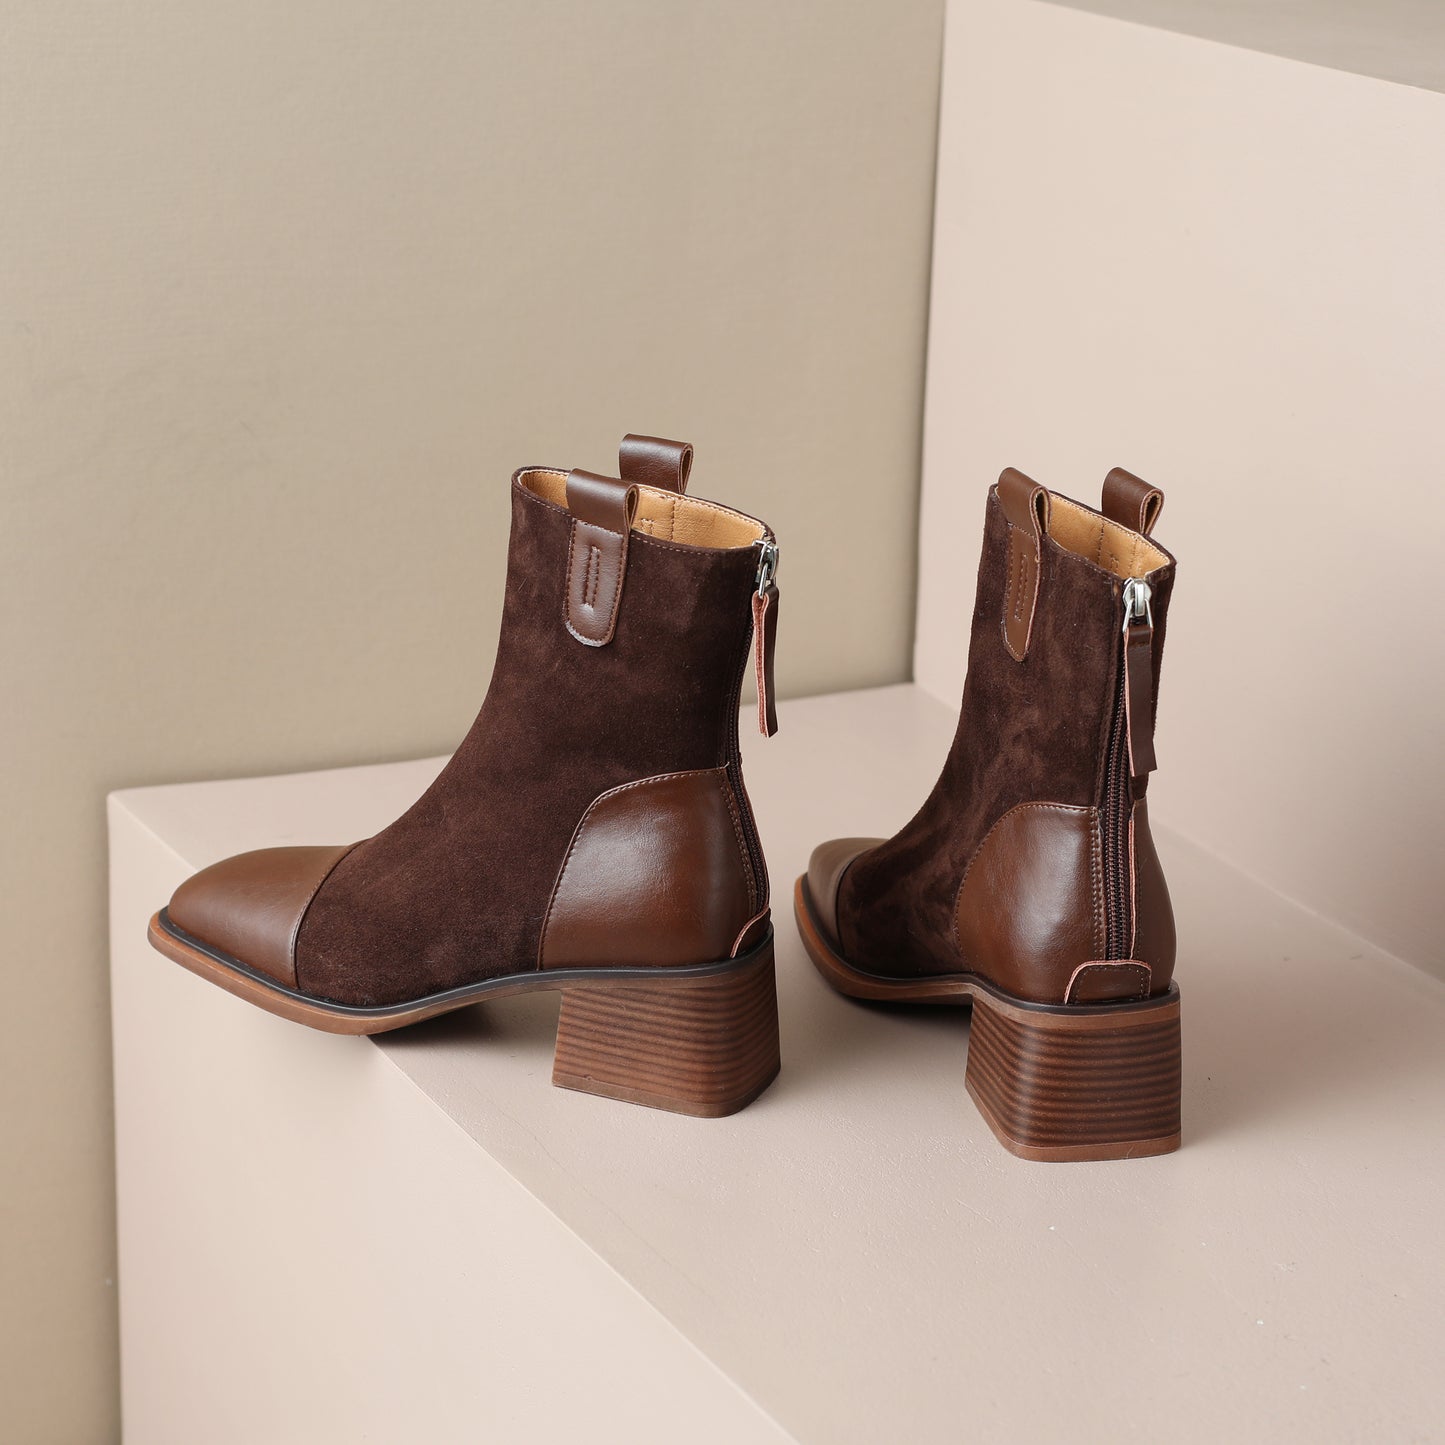 TinaCus Handmade Women's Suede Leather Cap Toe Back Zip Mid Block Heel Charming Calf-High Boots